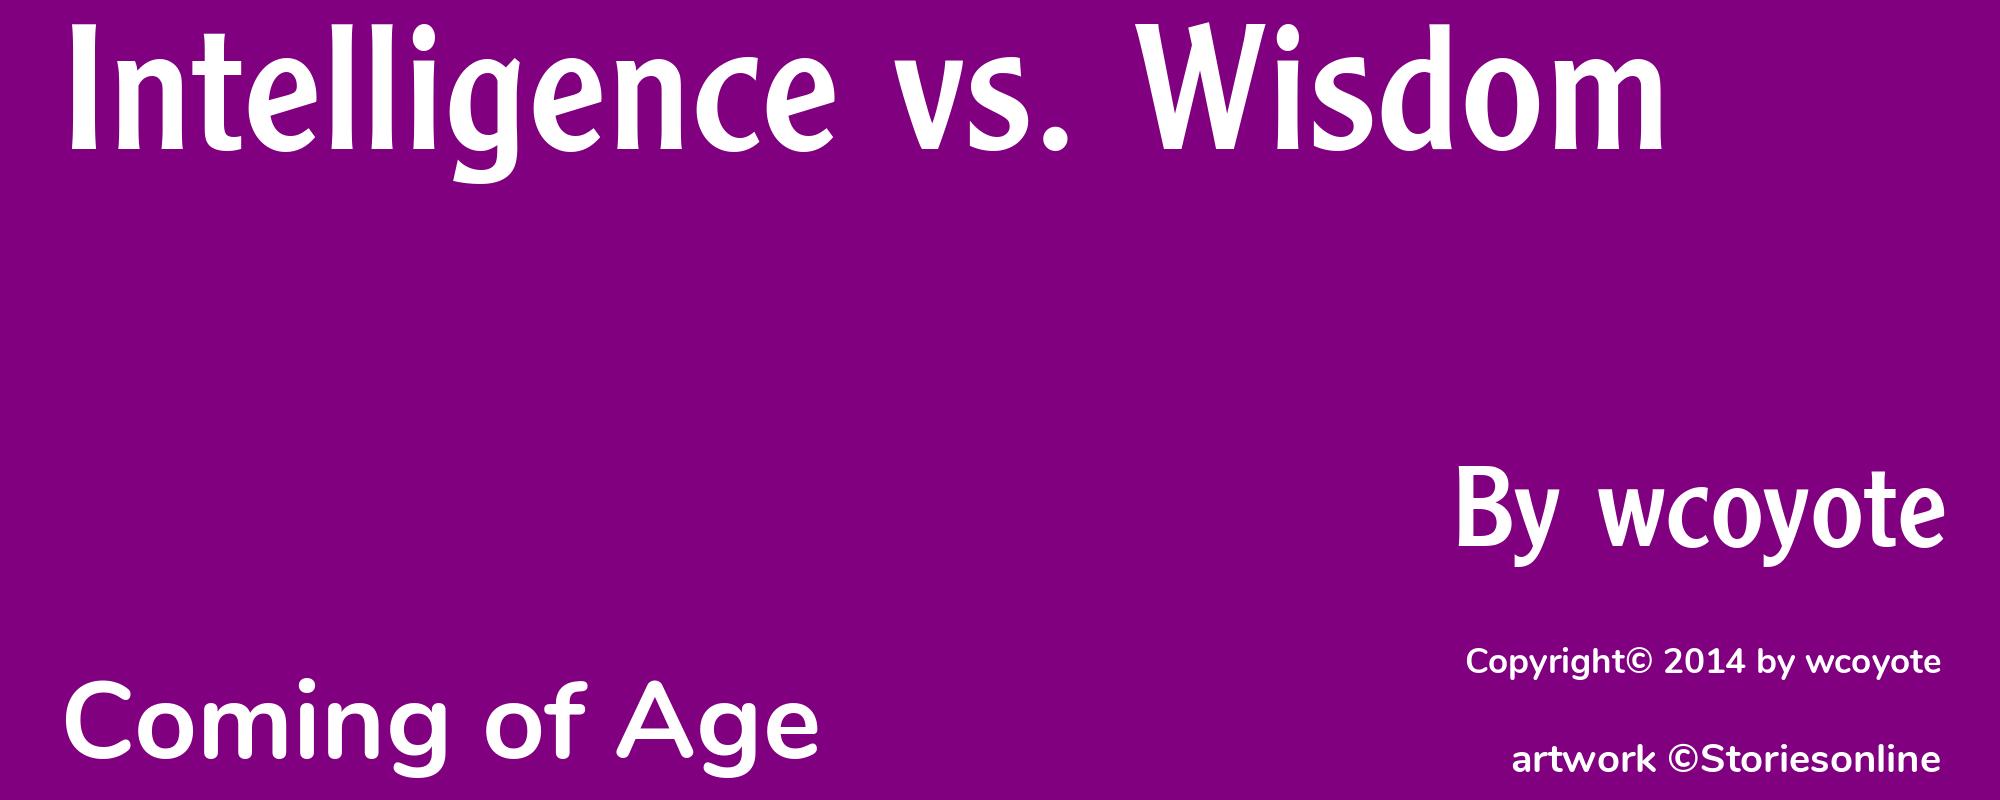 Intelligence vs. Wisdom - Cover